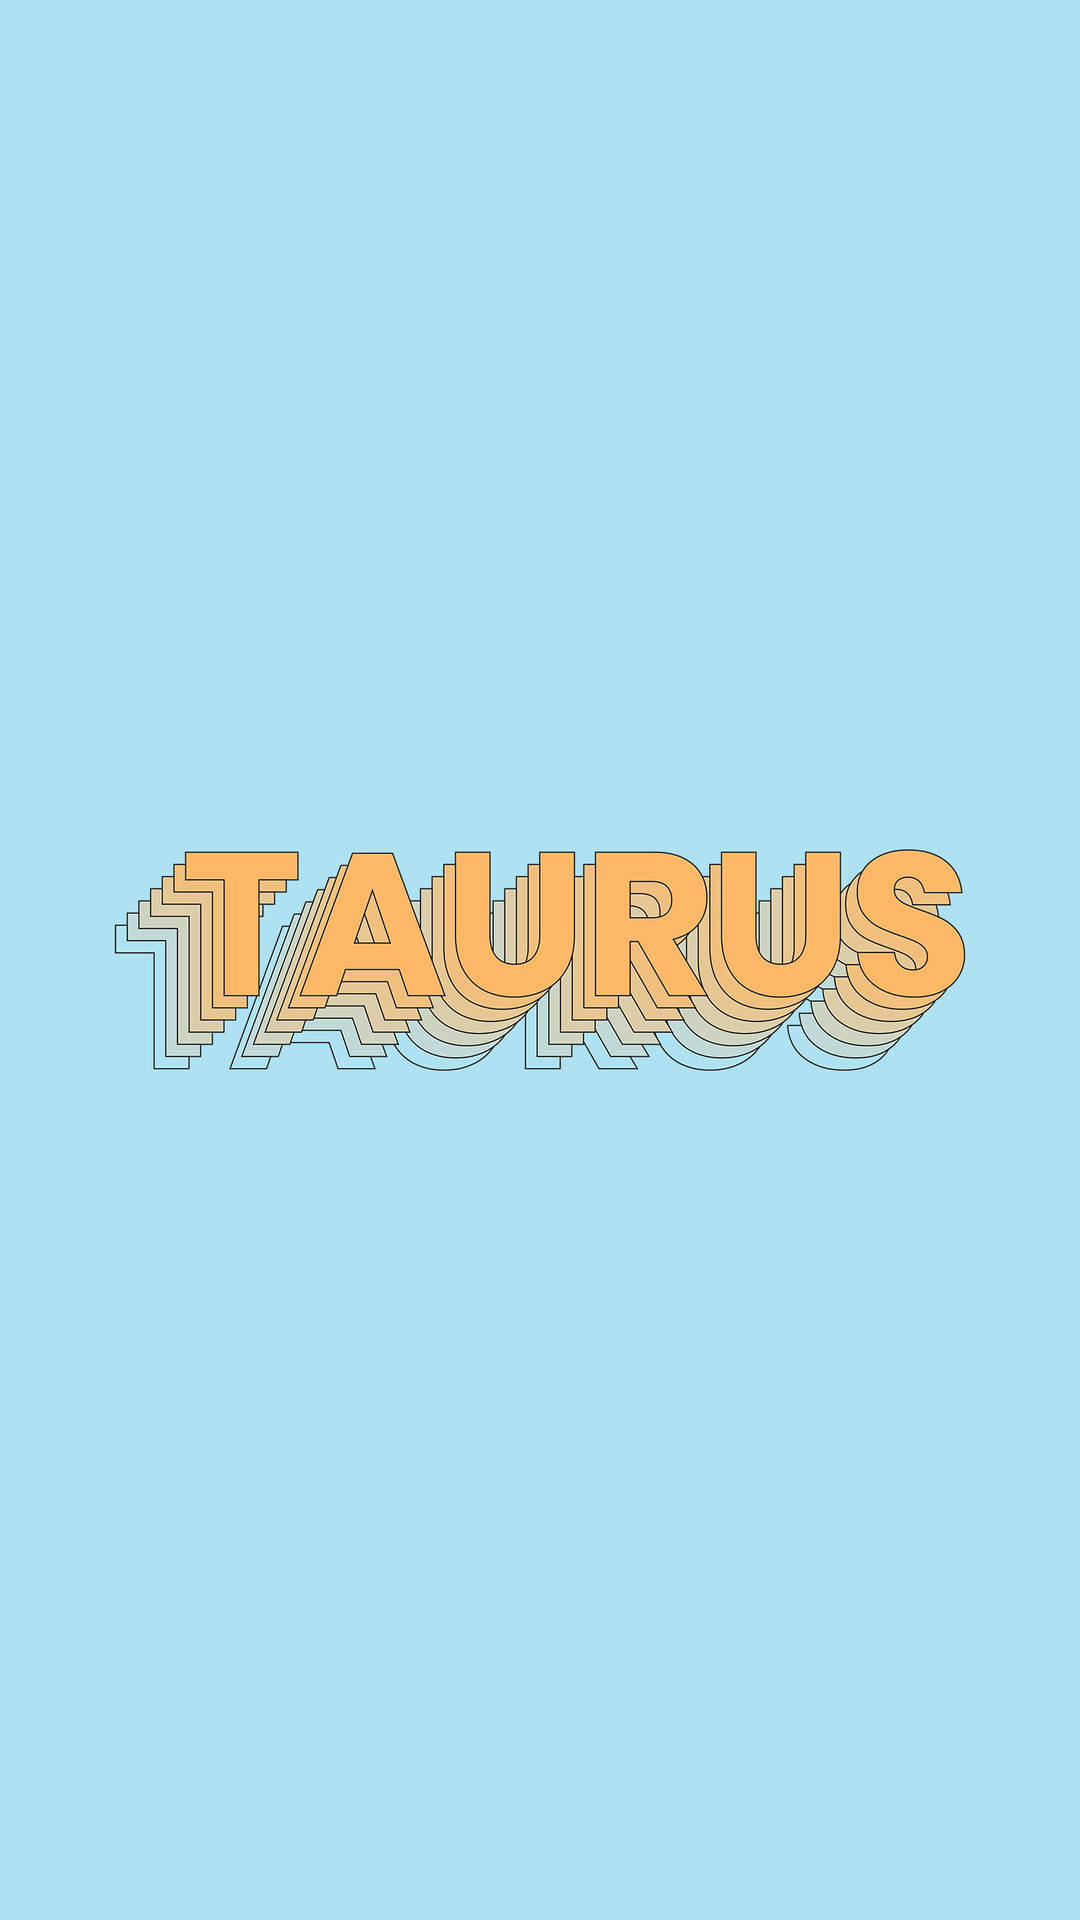 Tauruspalavra Fundo Azul Papel de Parede